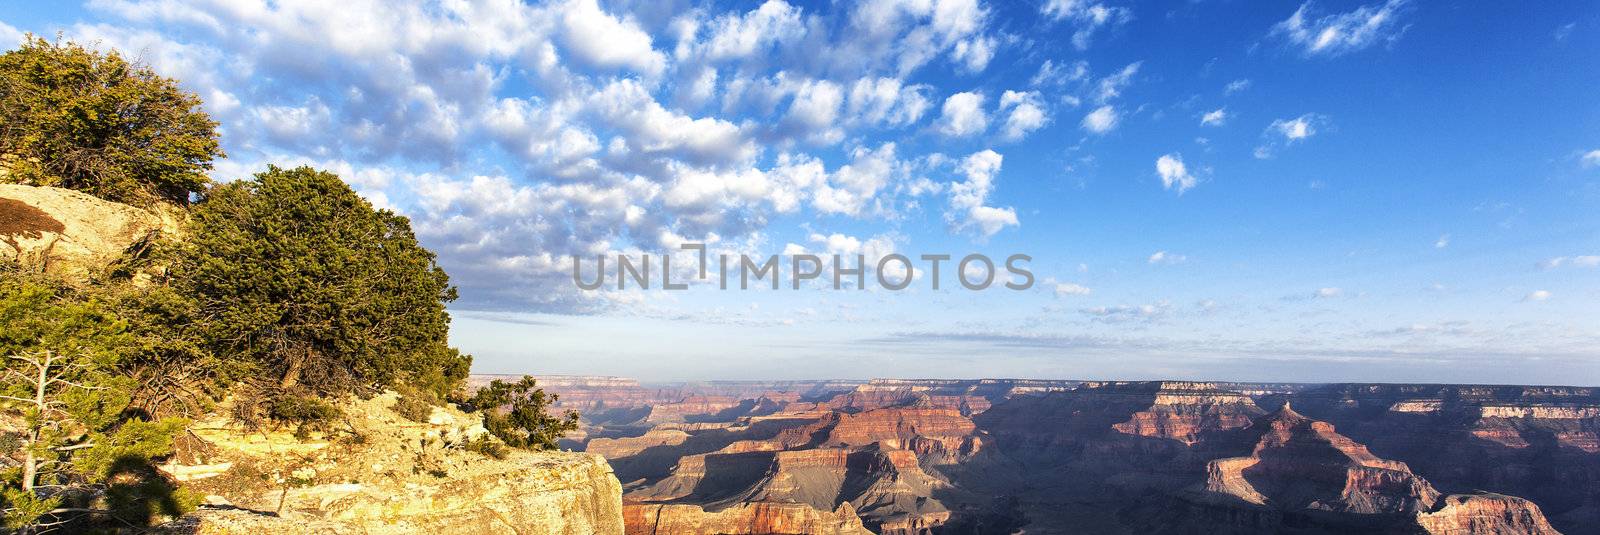 panoramic view of Grand Canyon at sunrise, USA